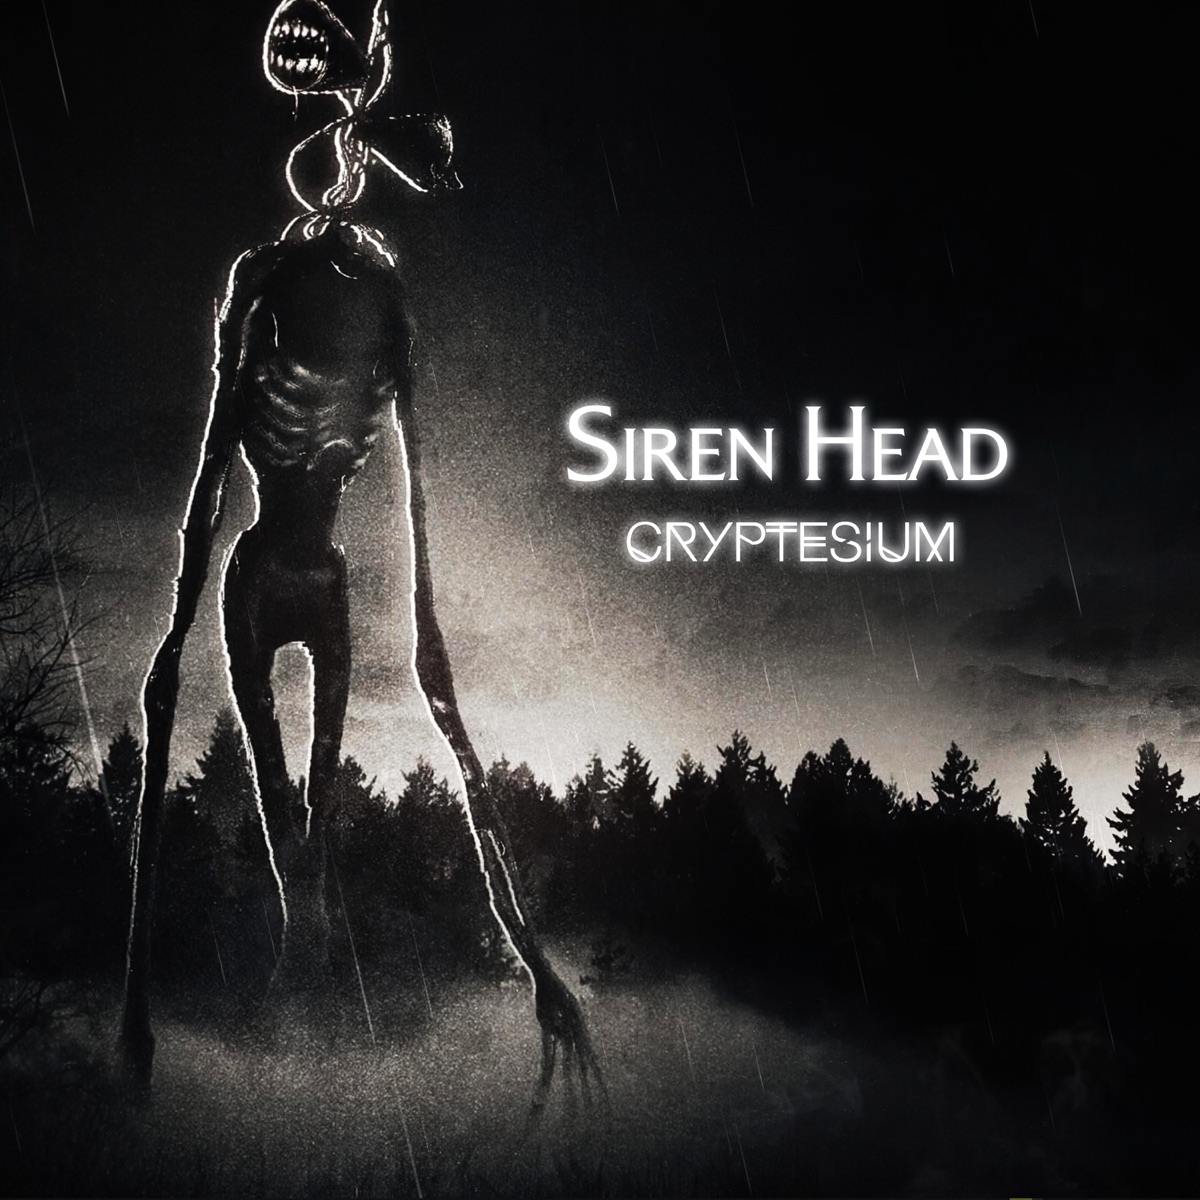 Siren Head Trap Sound - Song by Tha J-SQUAD & Remix Maniacs - Apple Music